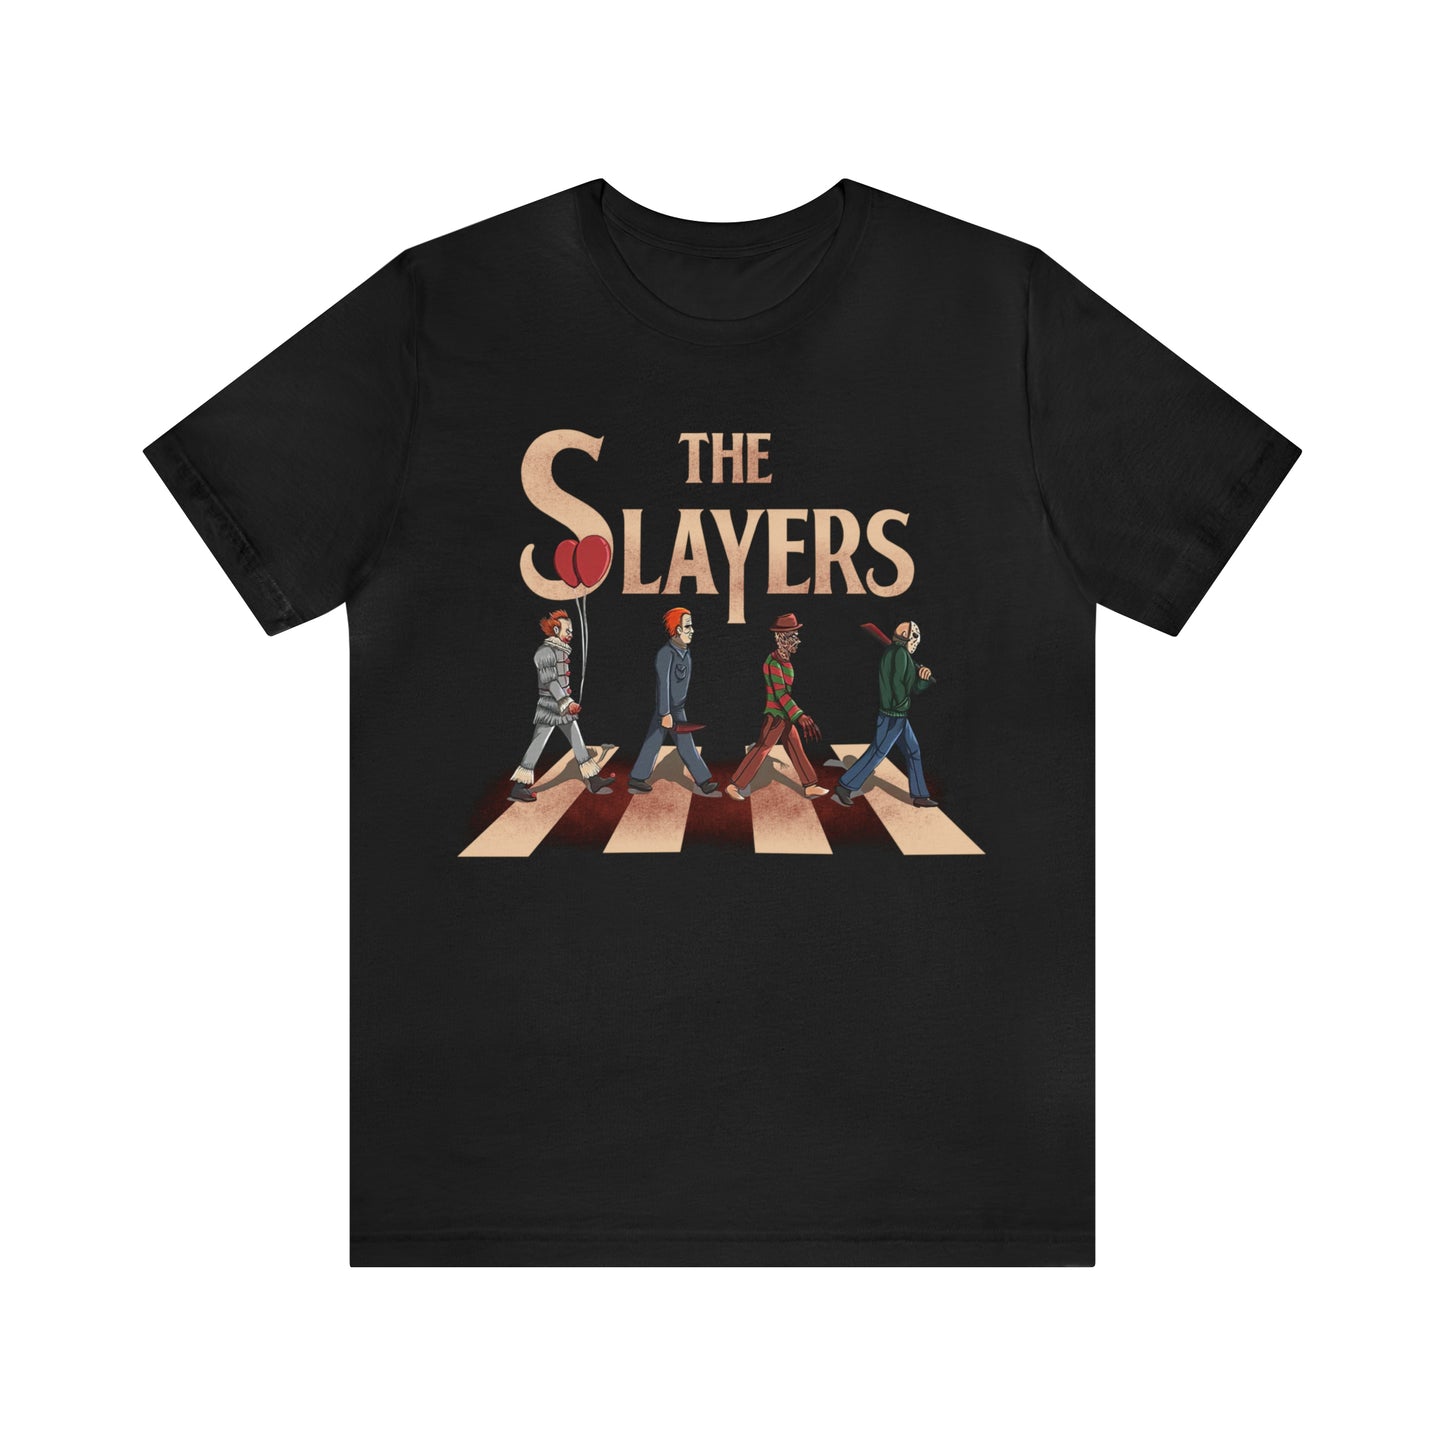 The Slayers Horror Character | Unisex Jersey Short Sleeve Tee